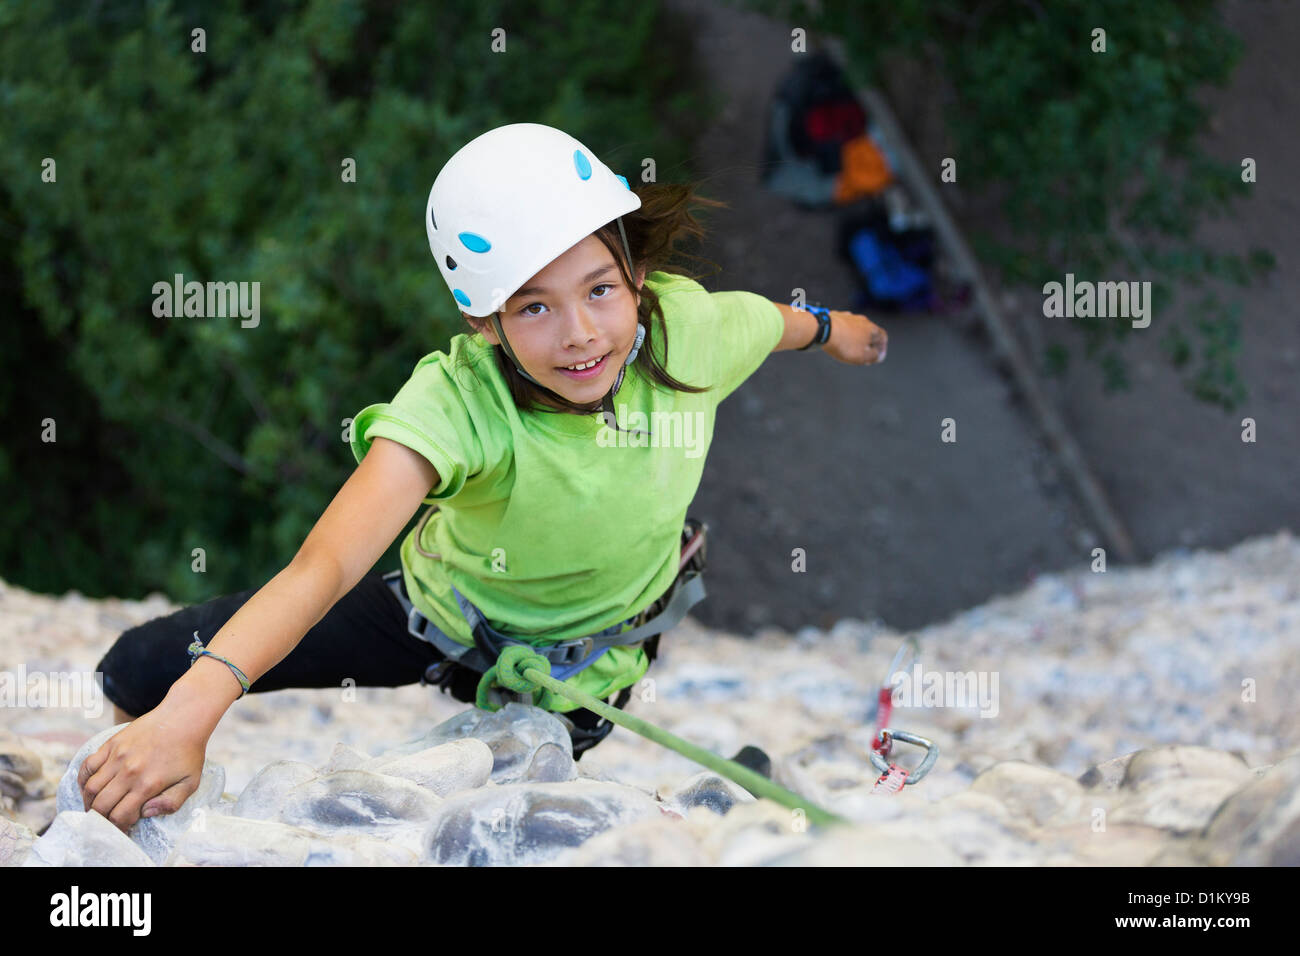 Mixed race girl rock climbing Stock Photo